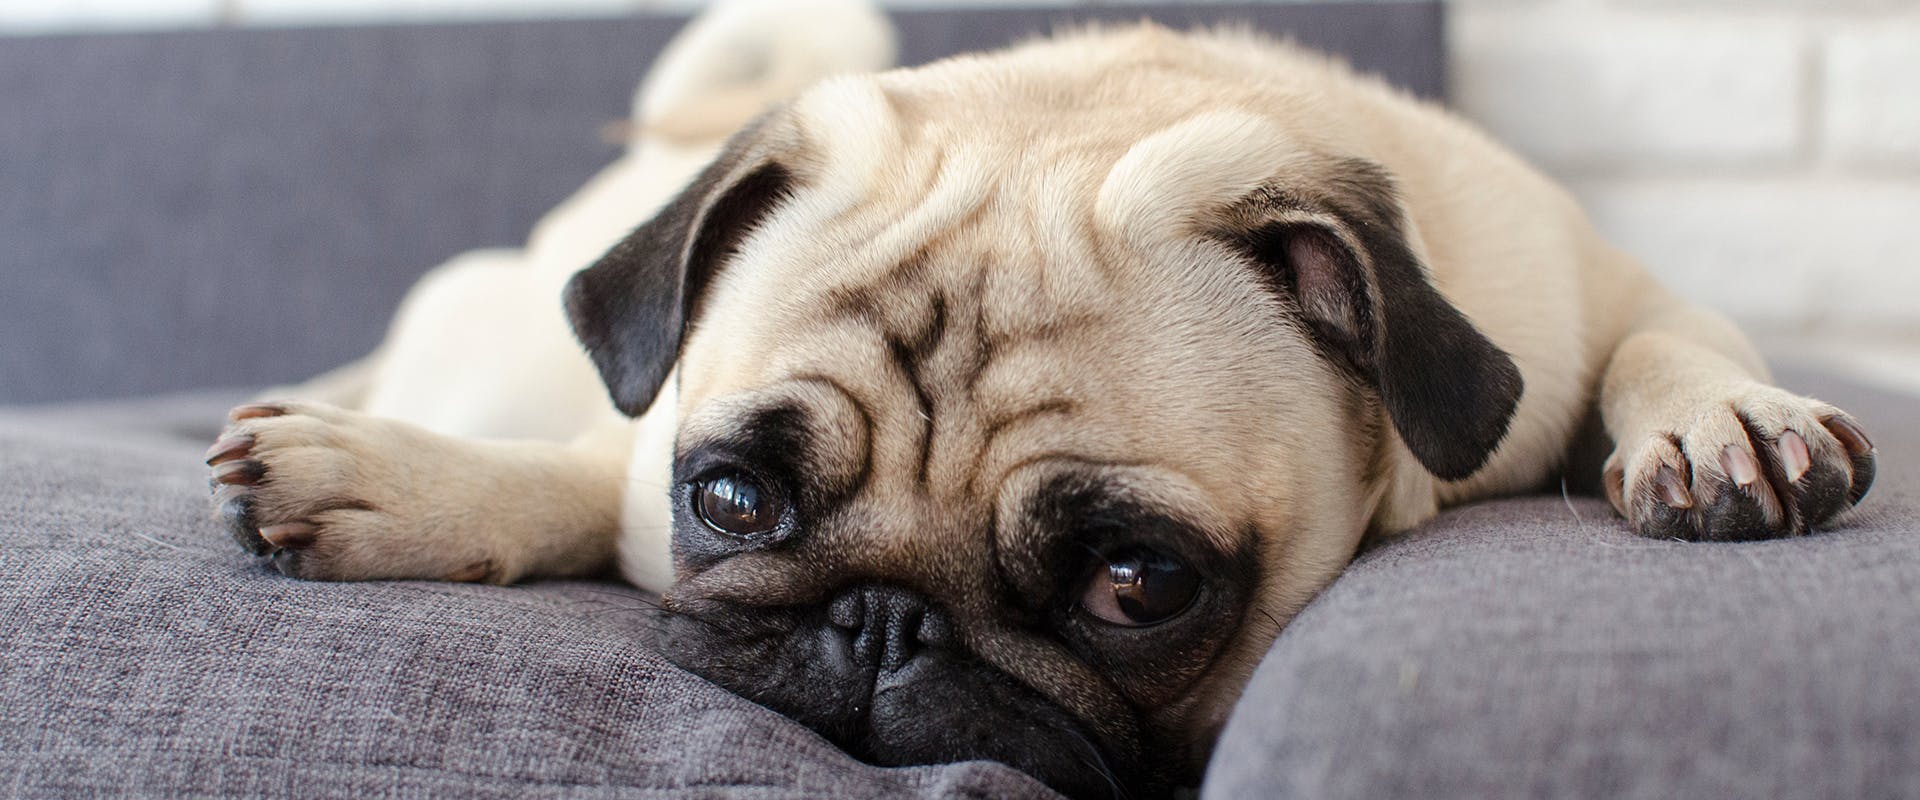 Do dogs get sad? A sad looking Pug sitting on a sofa